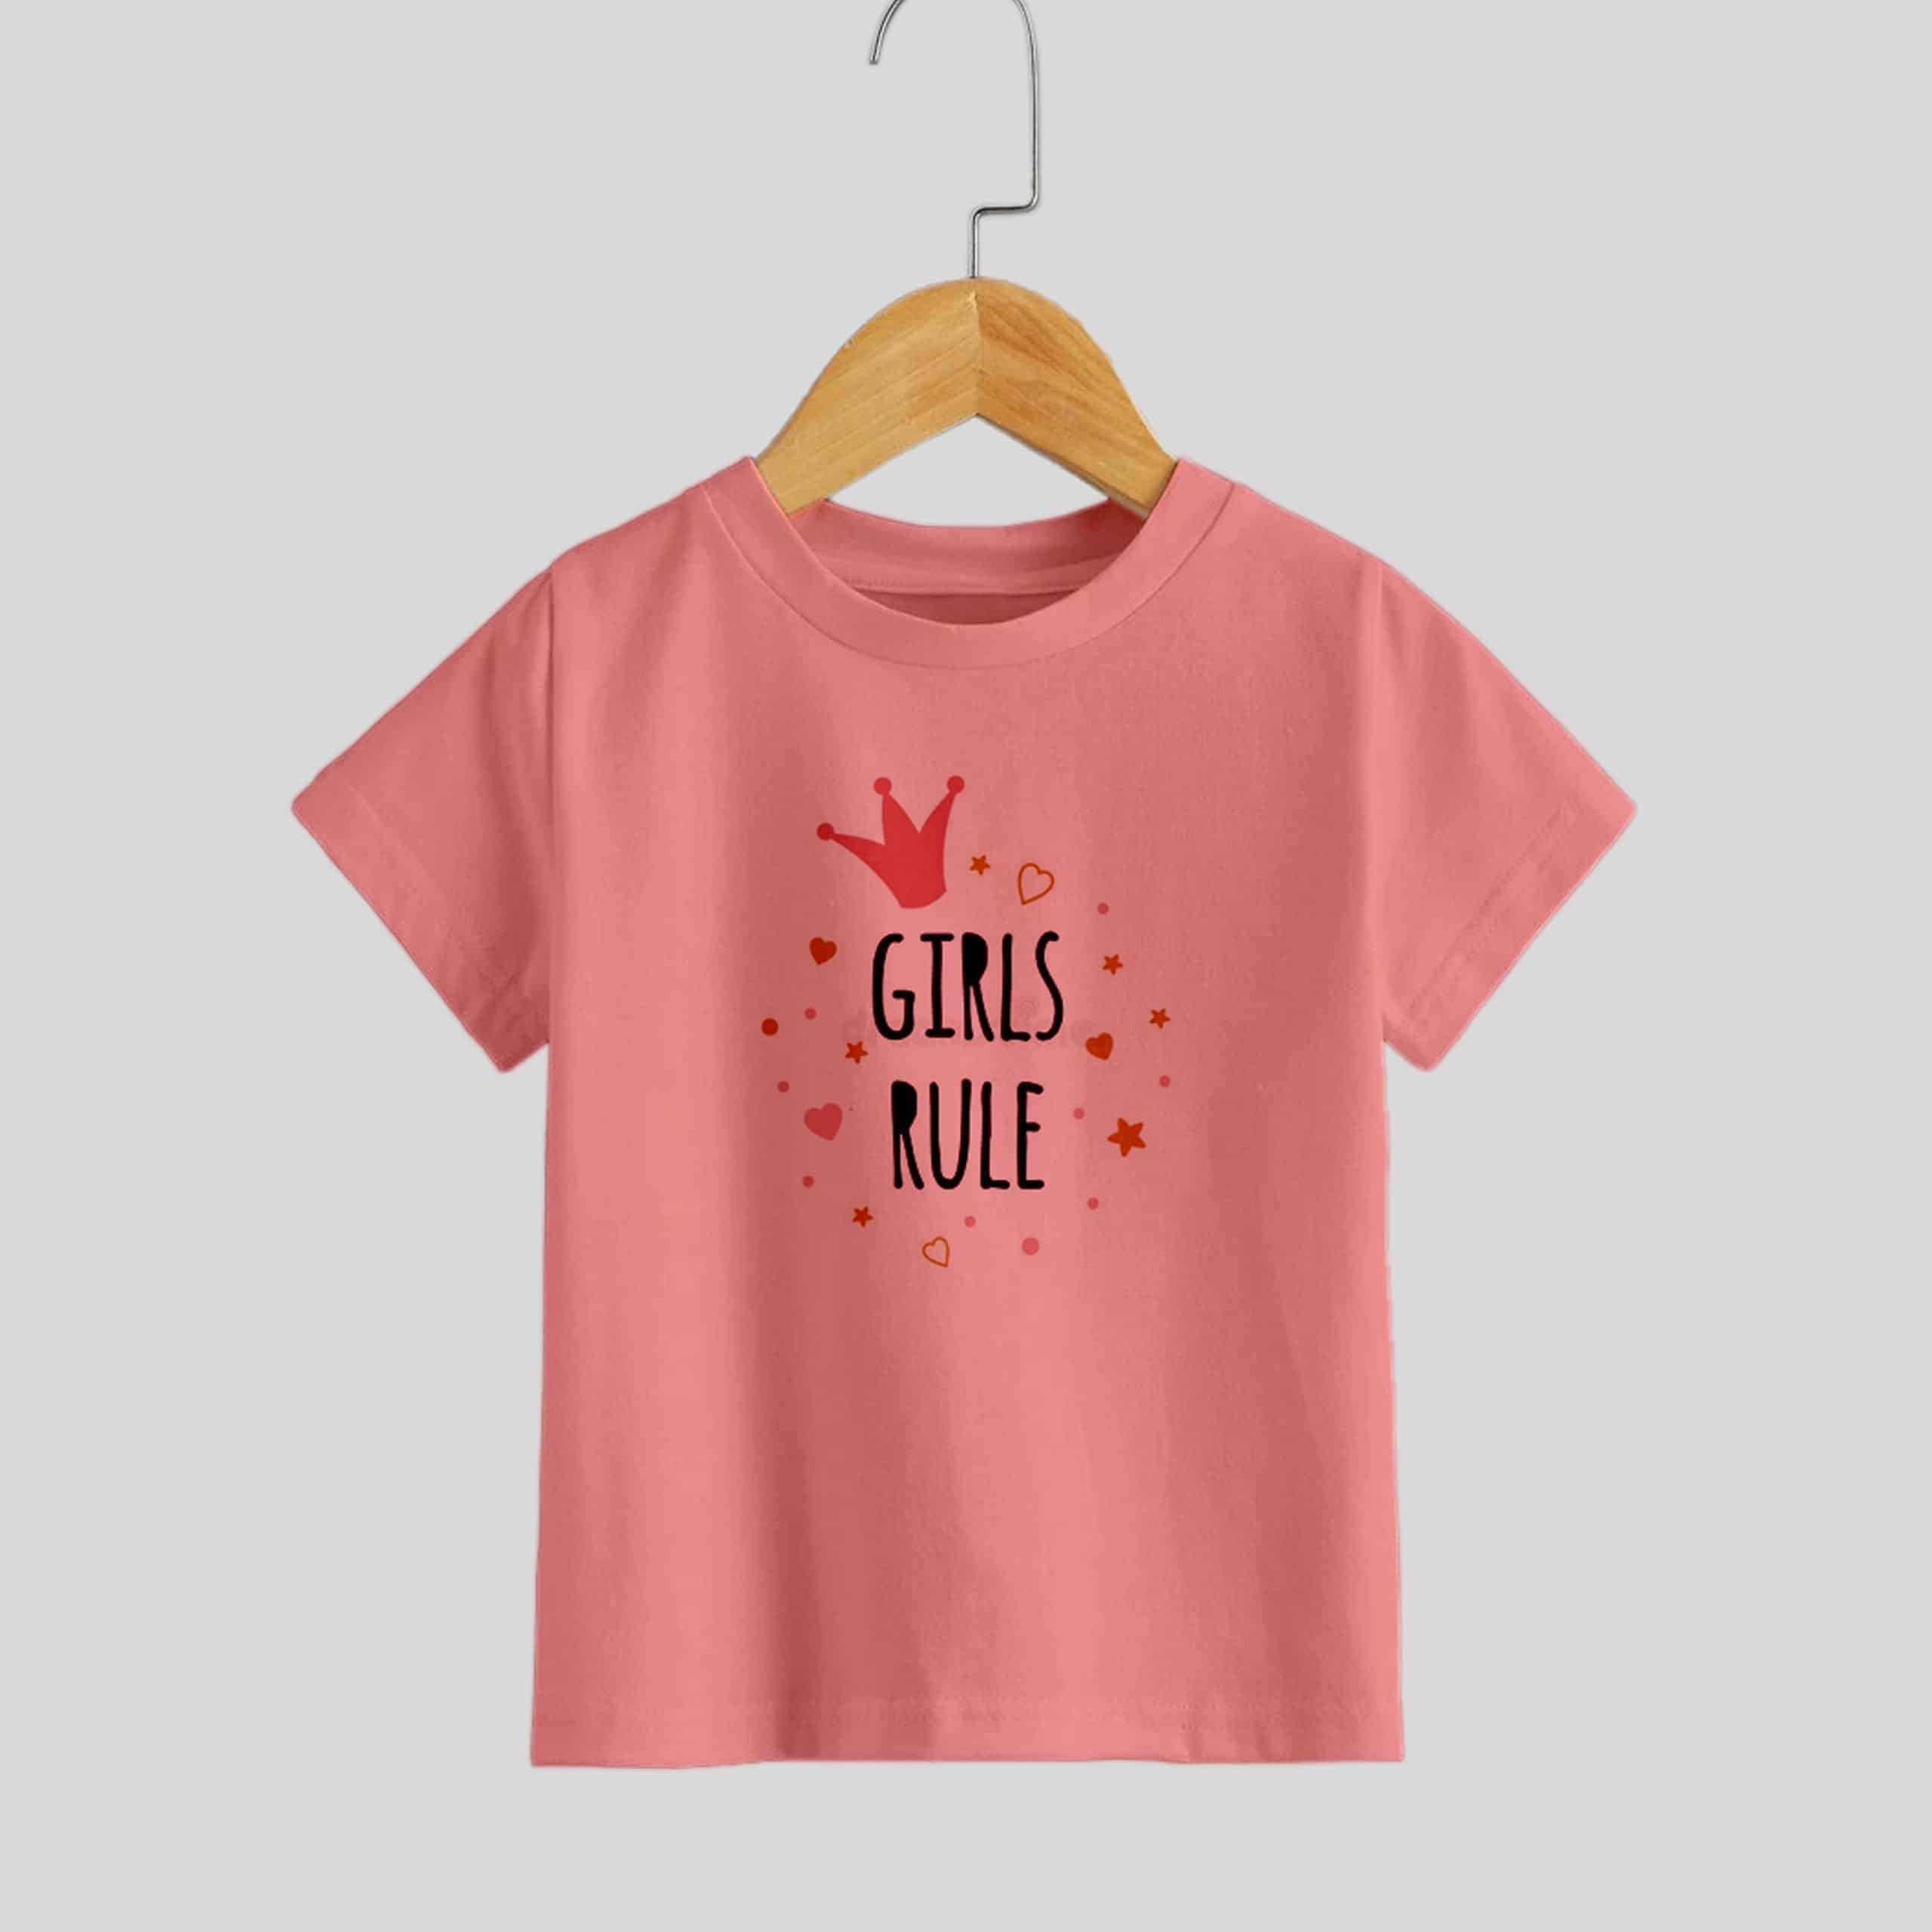 Girls rule print, pink T-shirt for casual wear-RKFCW194